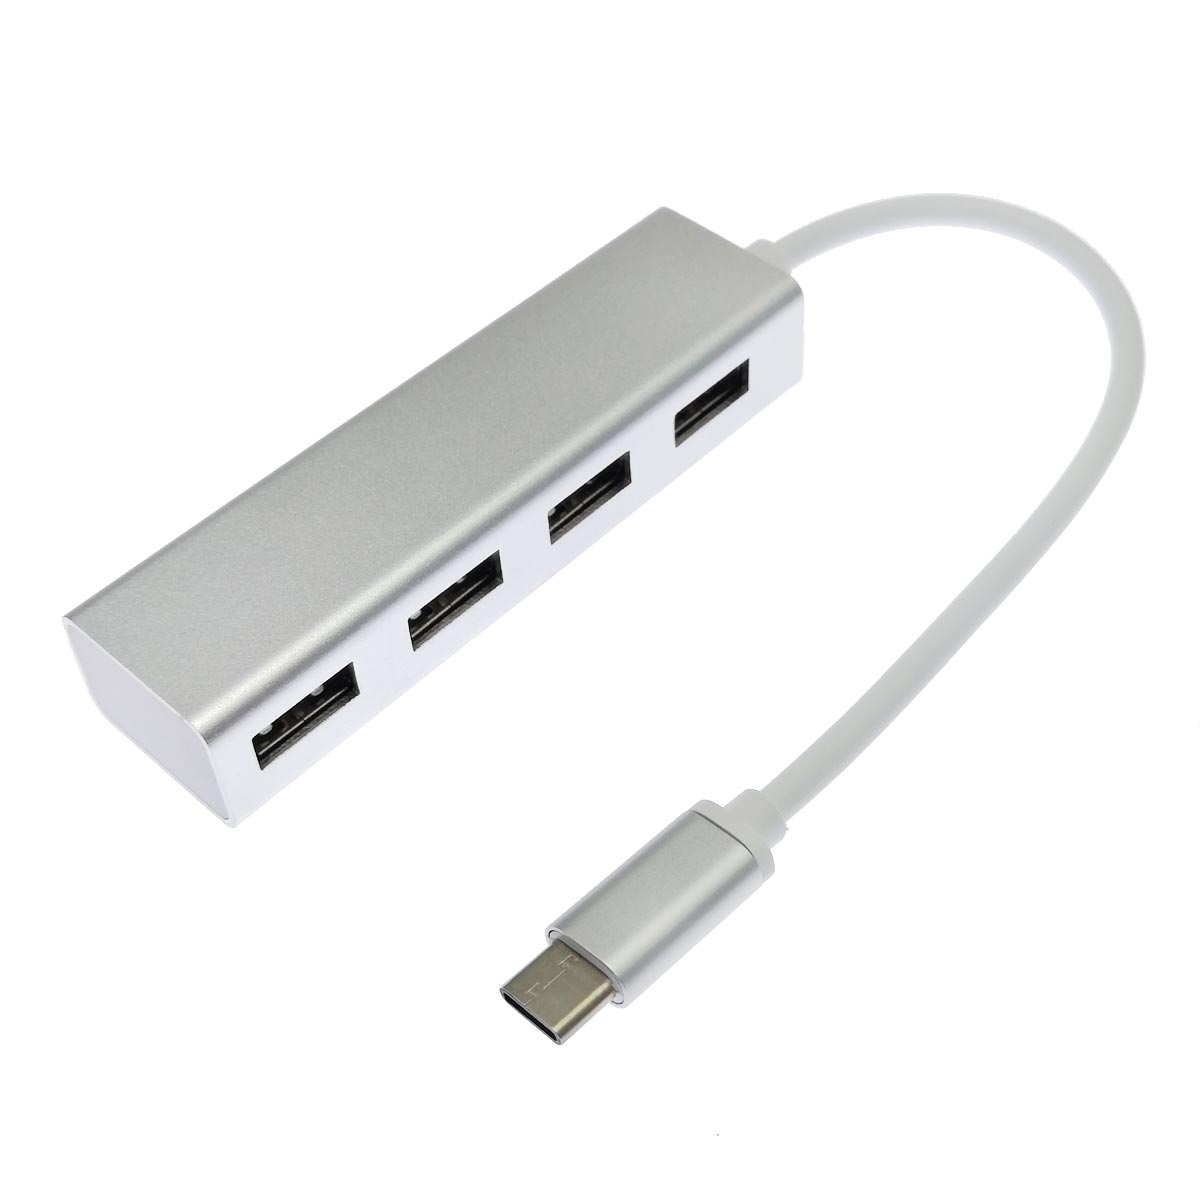 Адаптер разветвитель MR-T02 USB Type C на 4 USB, цвет серебристый